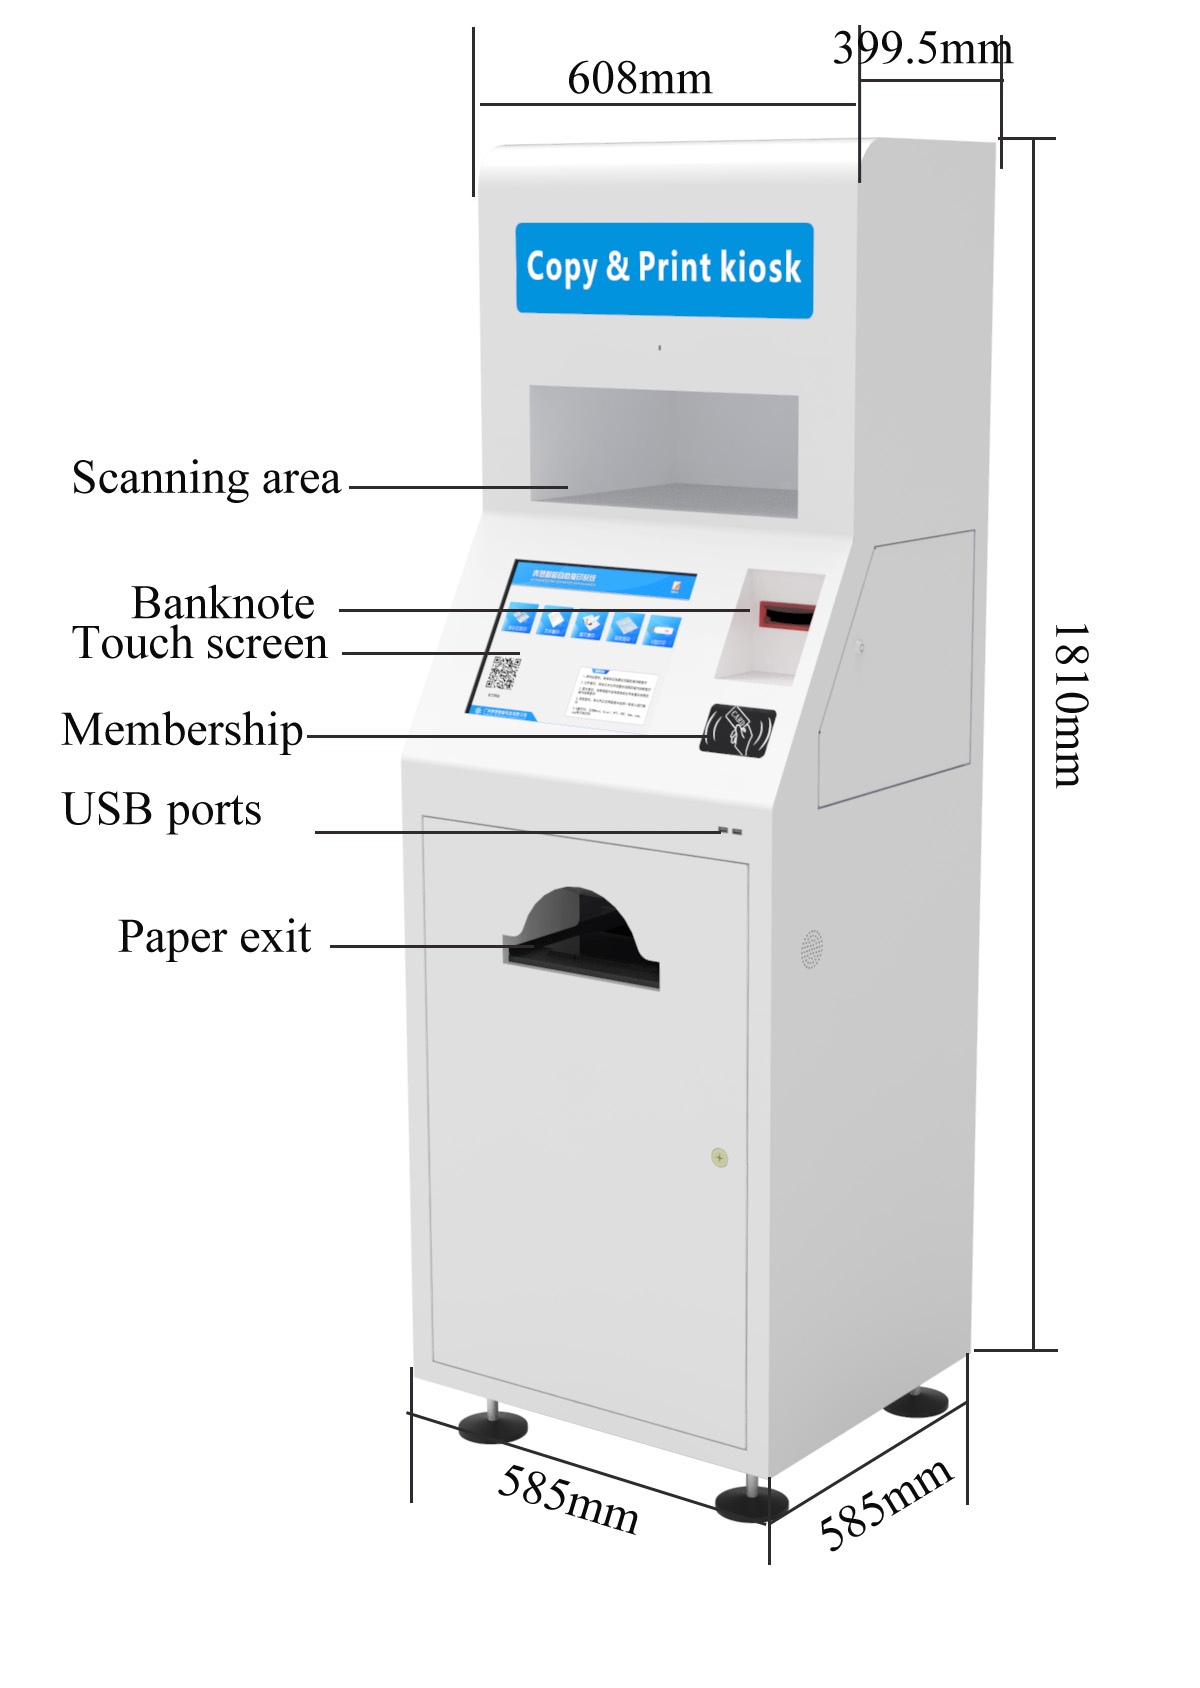 Self printer and copier kiosk